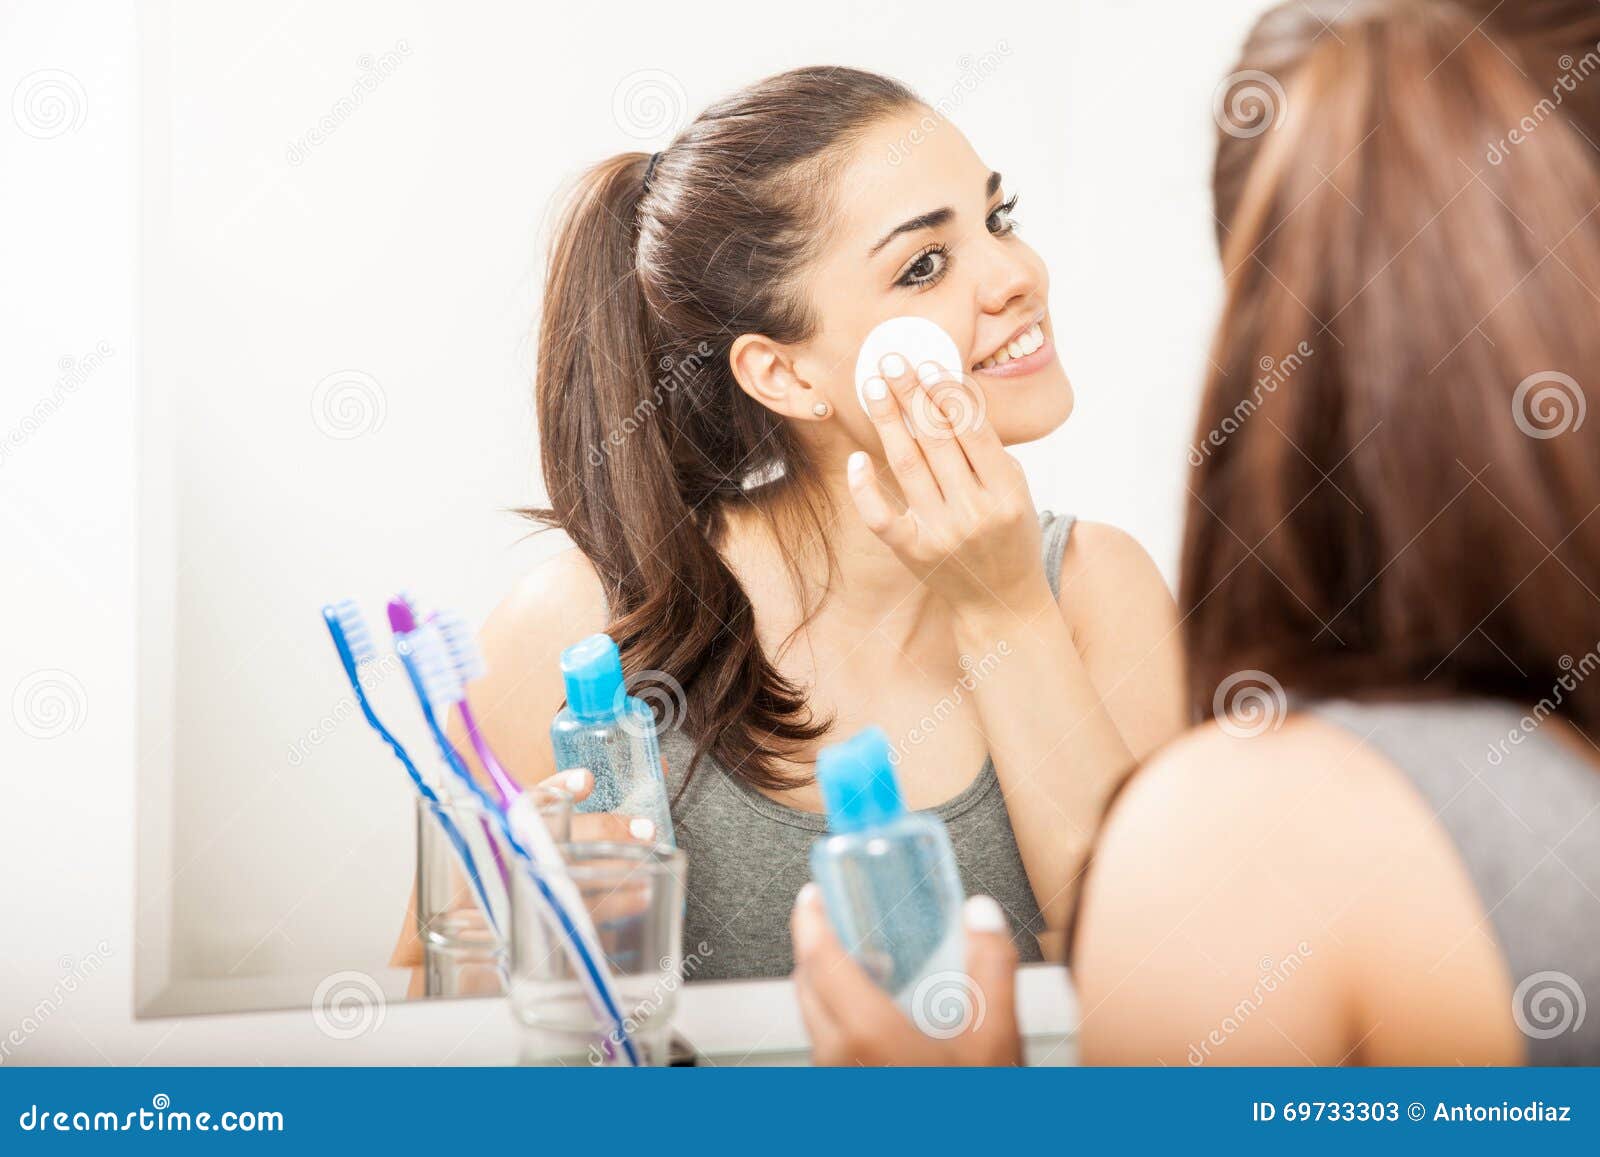 cute hispanic woman removing her makeup